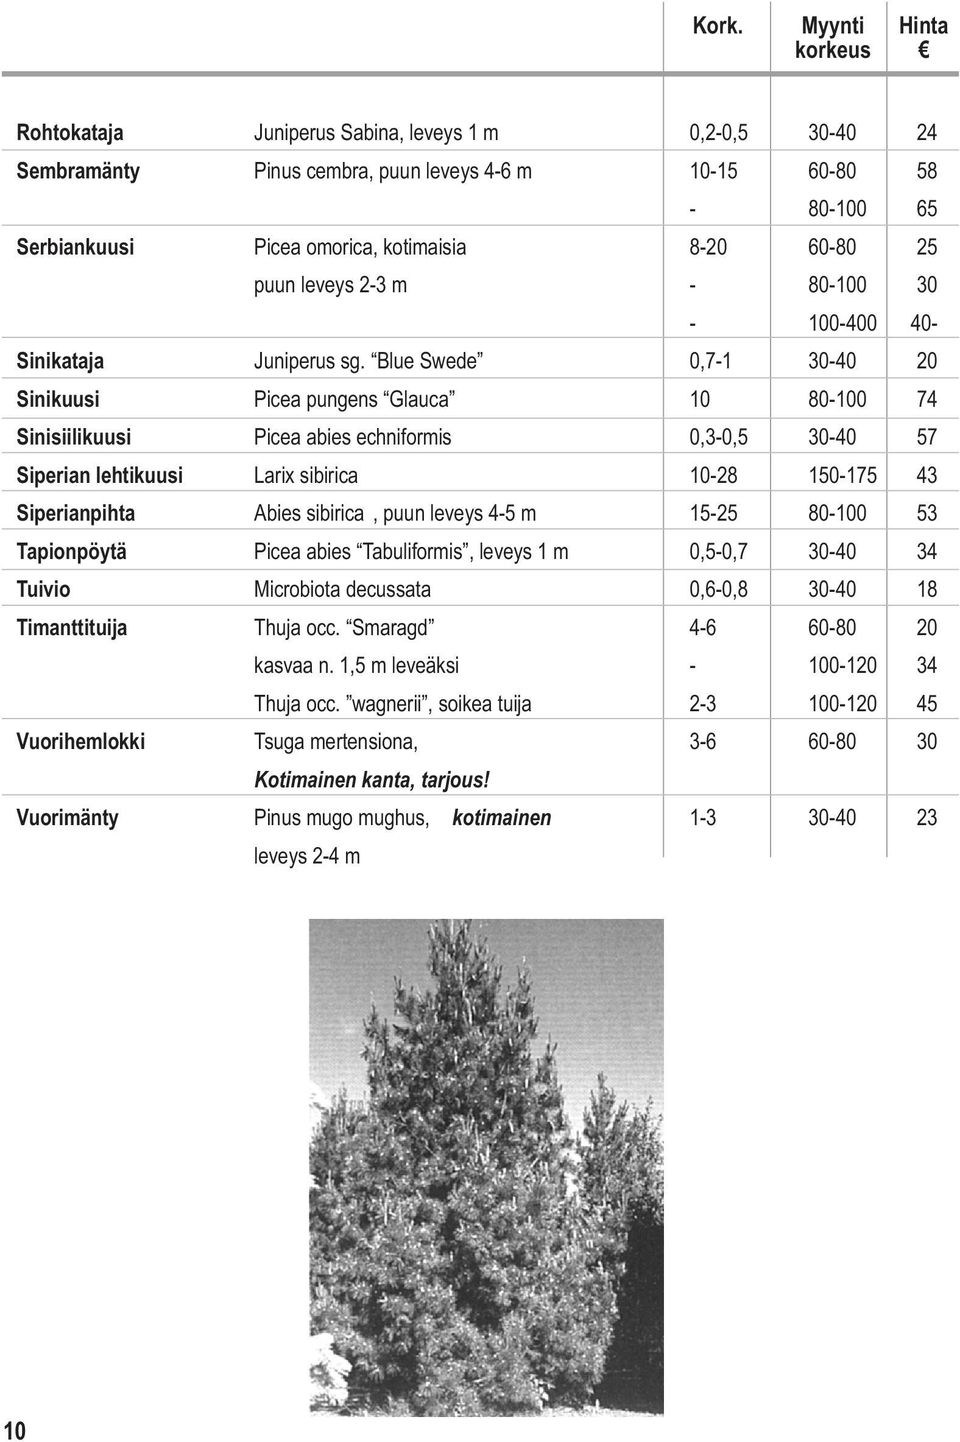 Blue Swede 0,7-1 30-40 20 Sinikuusi Picea pungens Glauca 10 80-100 74 Sinisiilikuusi Picea abies echniformis 0,3-0,5 30-40 57 Siperian lehtikuusi Larix sibirica 10-28 150-175 43 Siperianpihta Abies